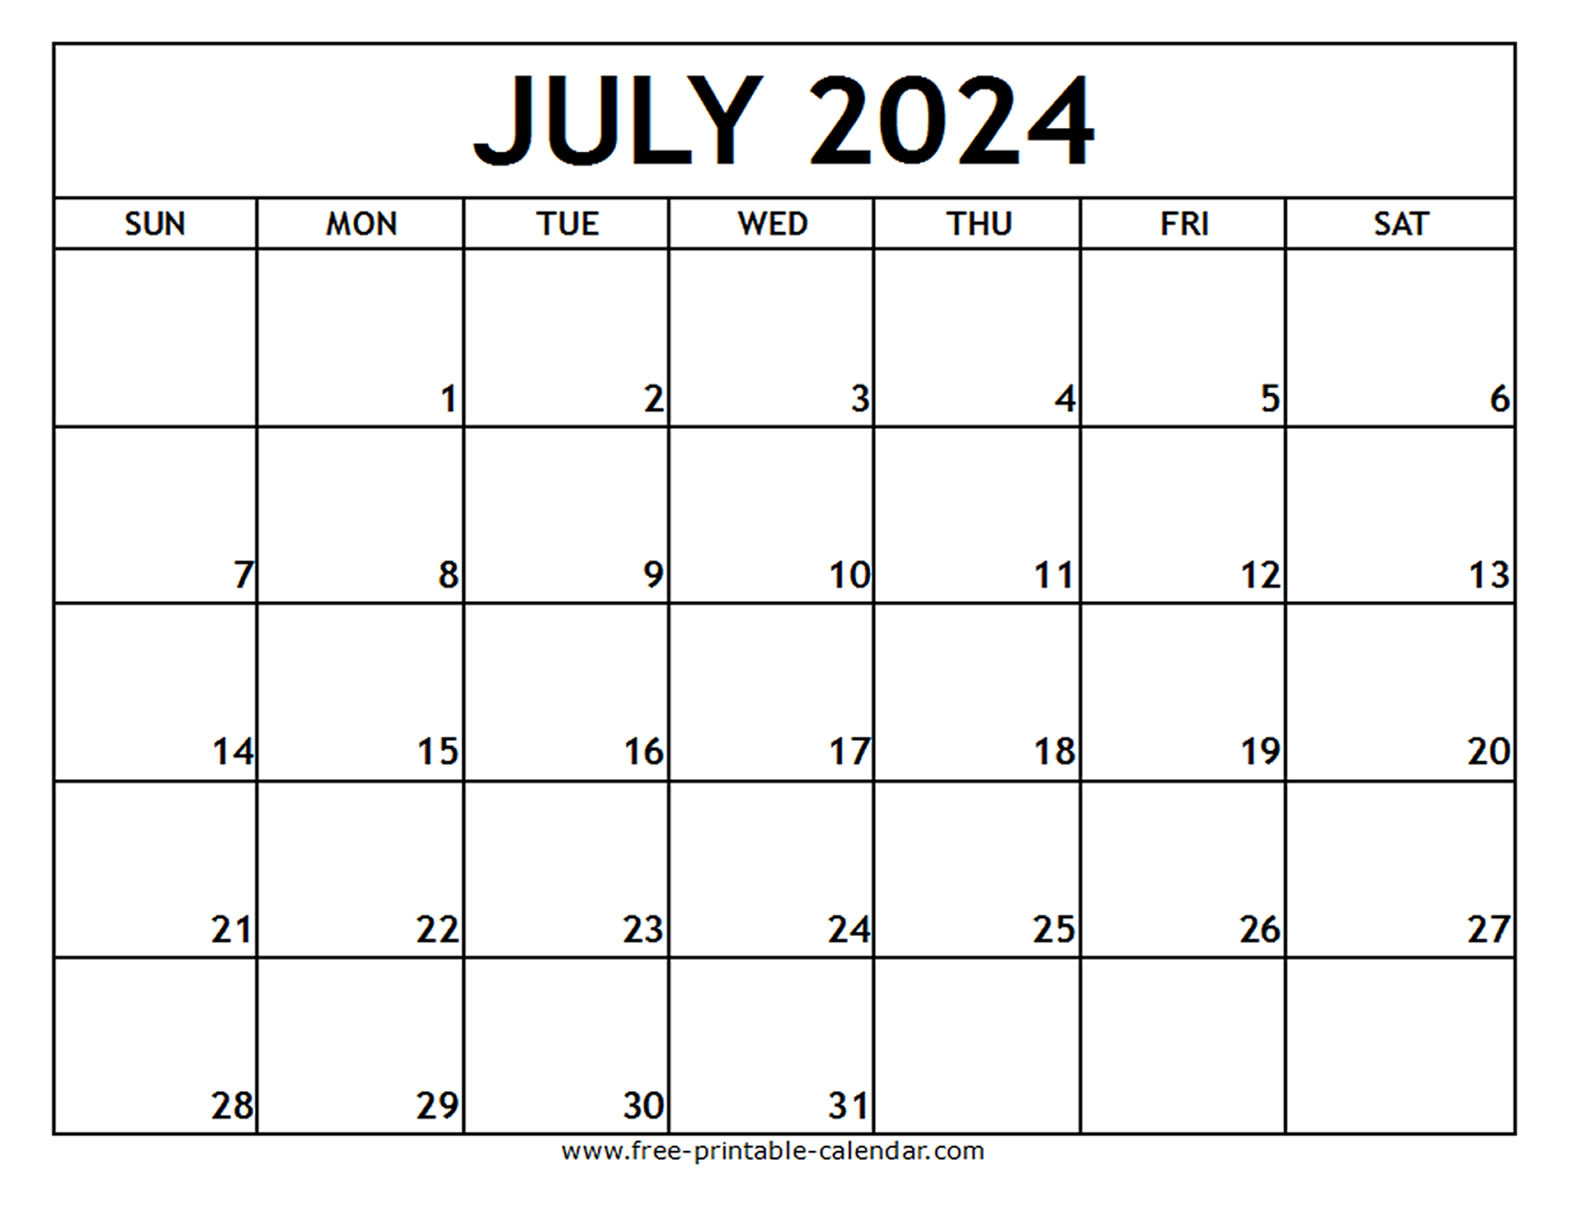 July 2024 Printable Calendar - Free-Printable-Calendar | July Calendar 2024 Free Printable